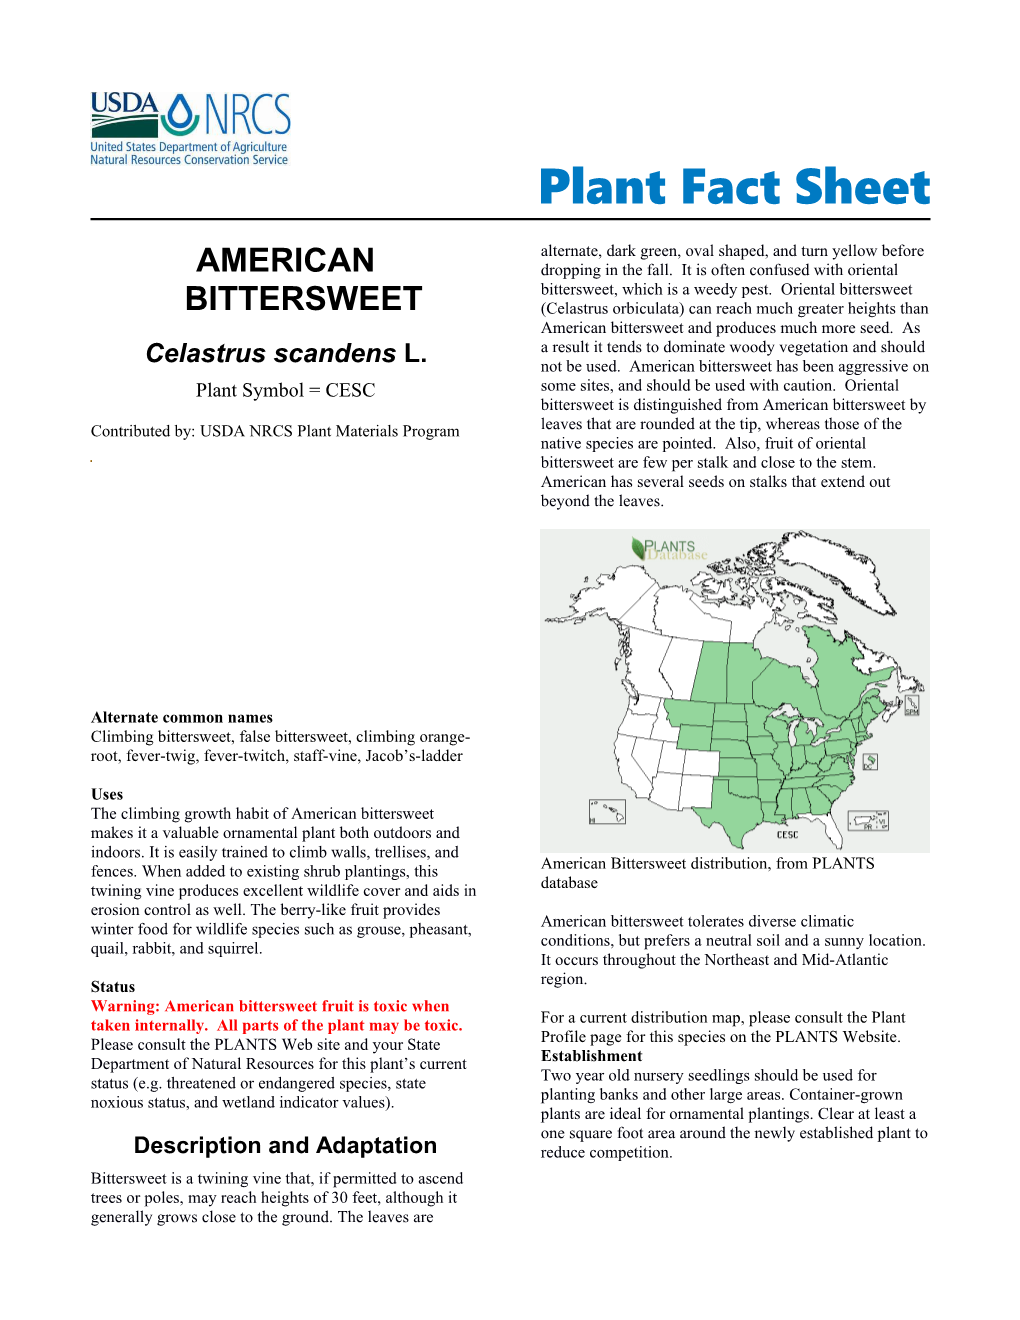 American Bittersweet Plant Fact Sheet